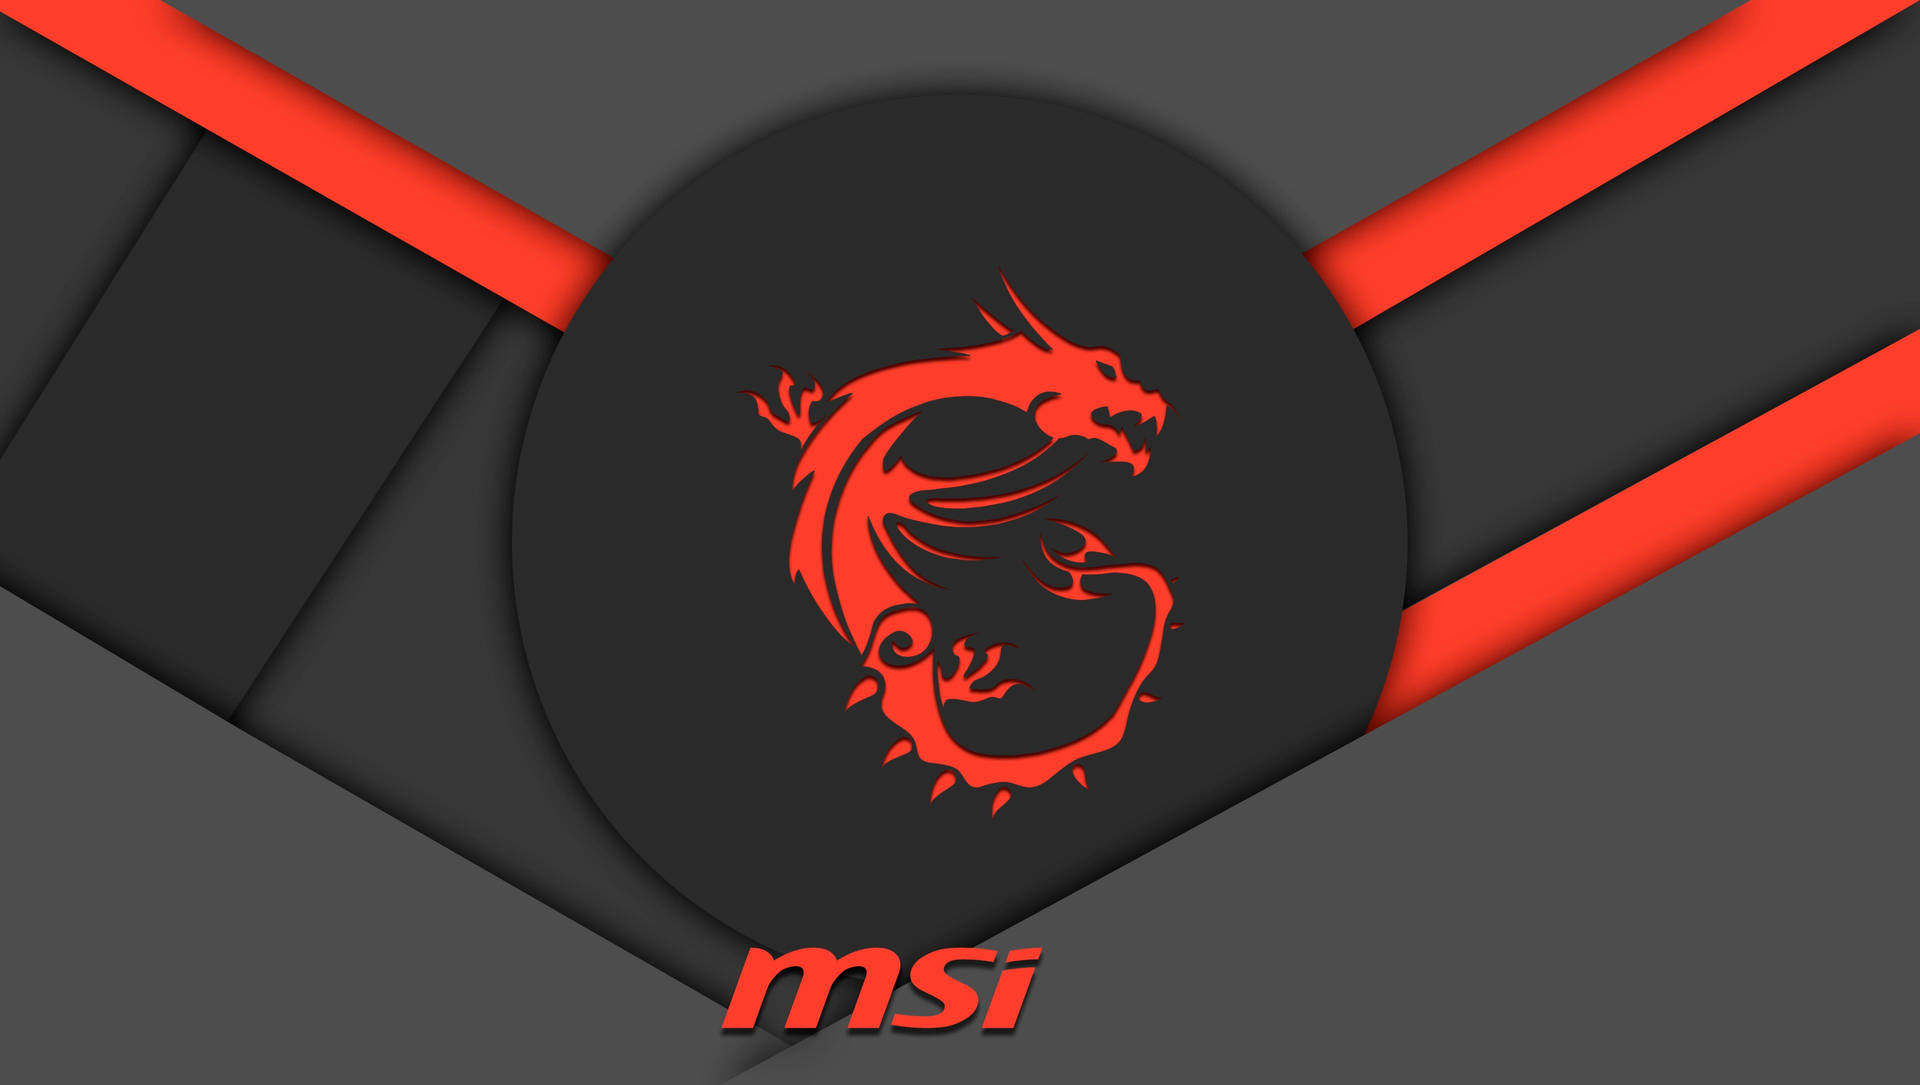 Msi 4k Red Dragon Banner